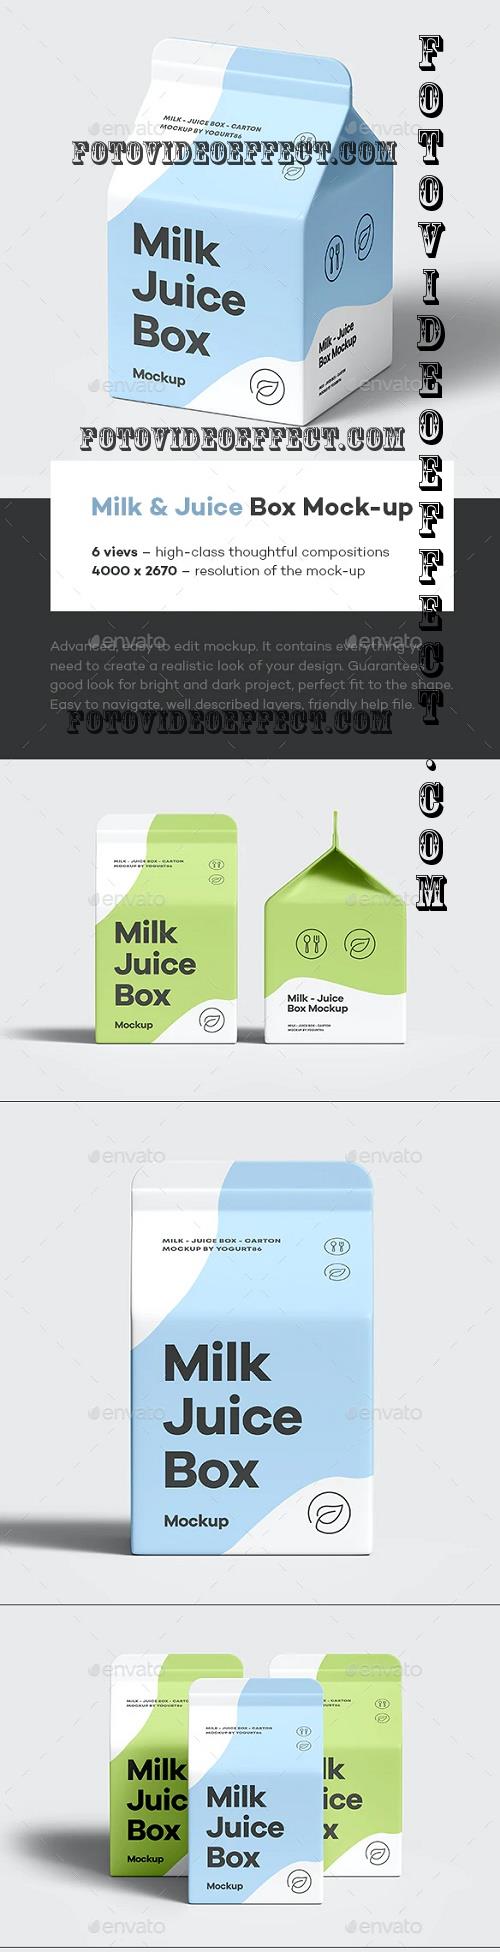 Milk Juice Box Mock-up - 39926306